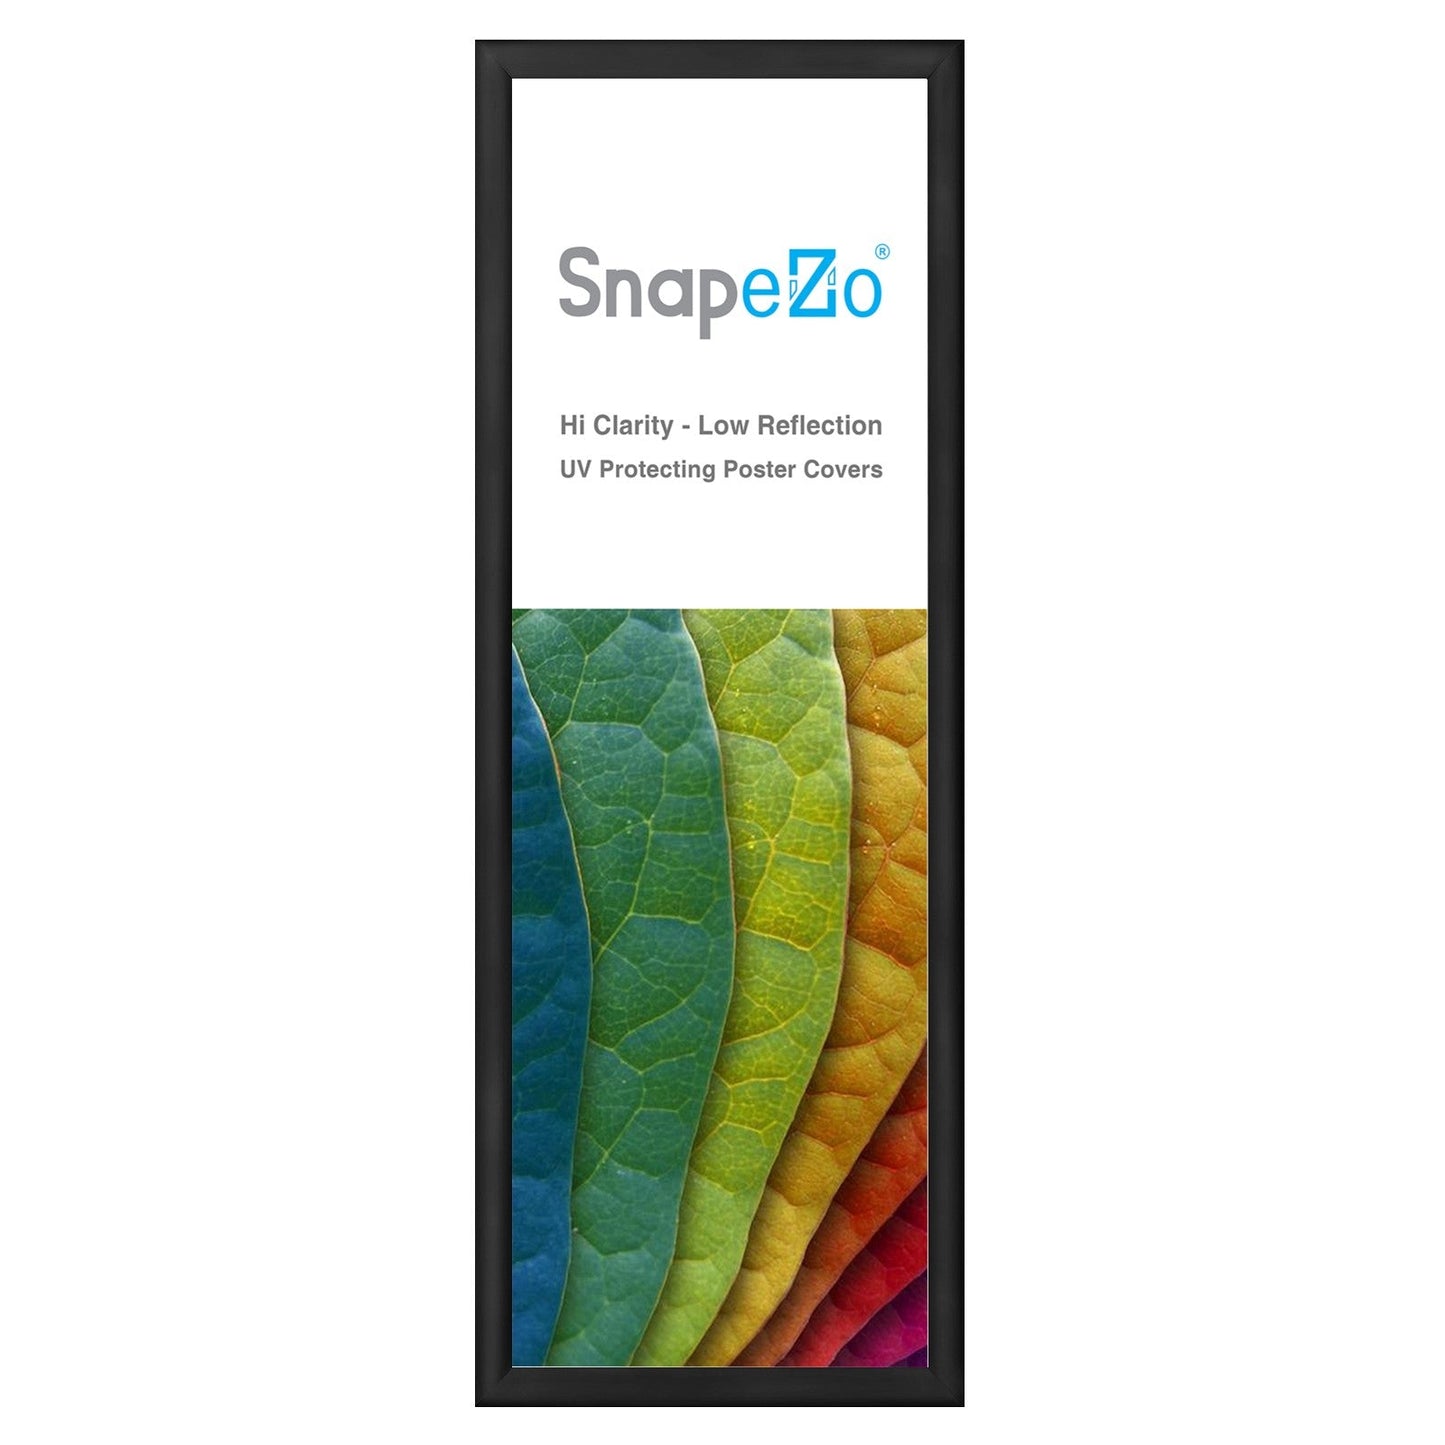 10x29 Black SnapeZo® Snap Frame - 1.2" Profile